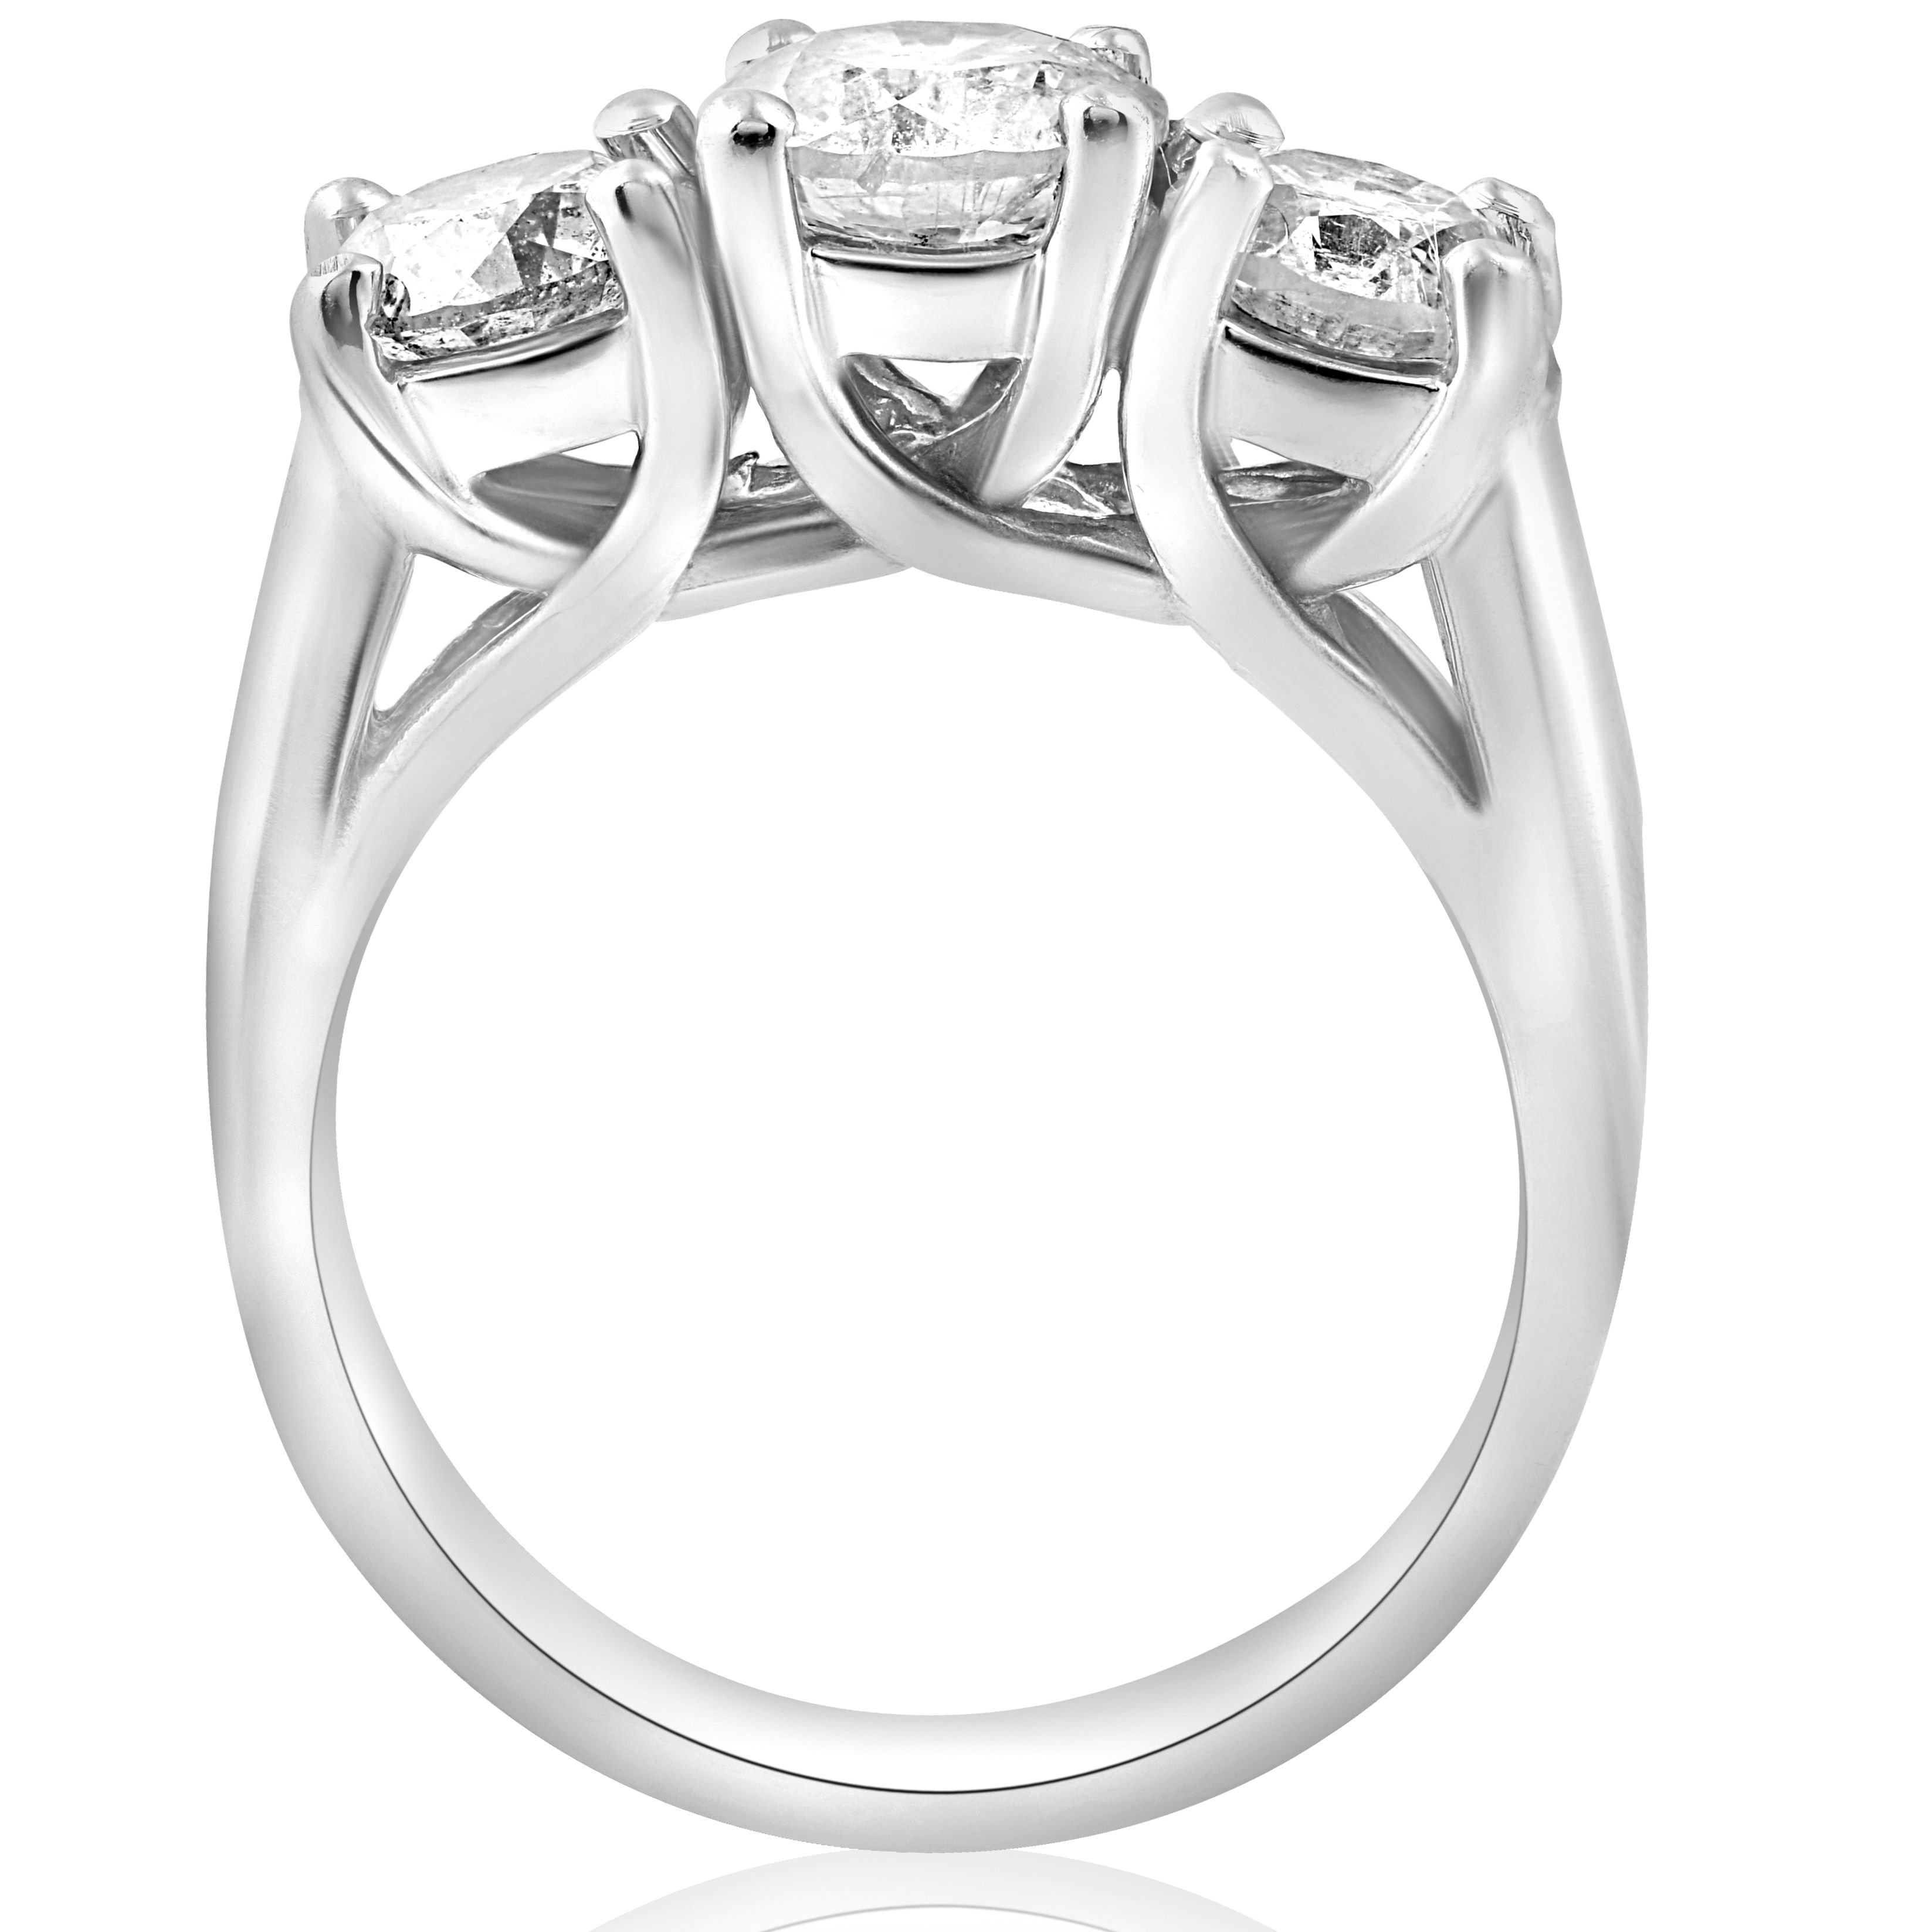 3ct Three Stone Diamond Wedding Anniversary Ring 14k White Gold Enhanced Throughout 2019 Enhanced Black And White Diamond Anniversary Ring In White Gold (View 14 of 25)